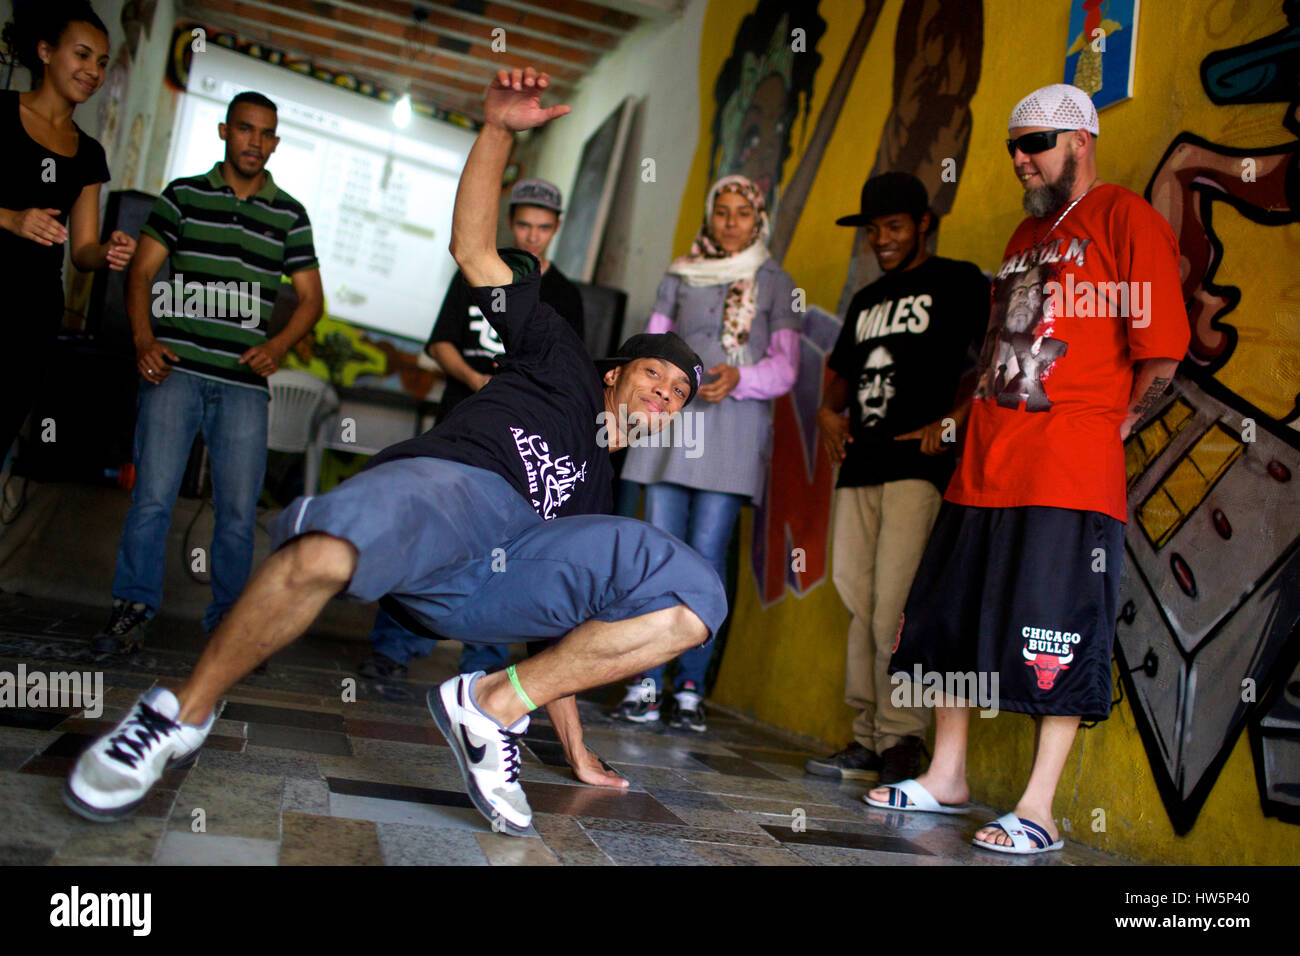 Hip hop Jihad - 11/09/2013 - Brasilien/Sao Paulo - kaab al-Qadir, Elaine und einige graphers im islamischen Zentrum embou Sao Paulo - Olivier goujon/le pictorium Stockfoto